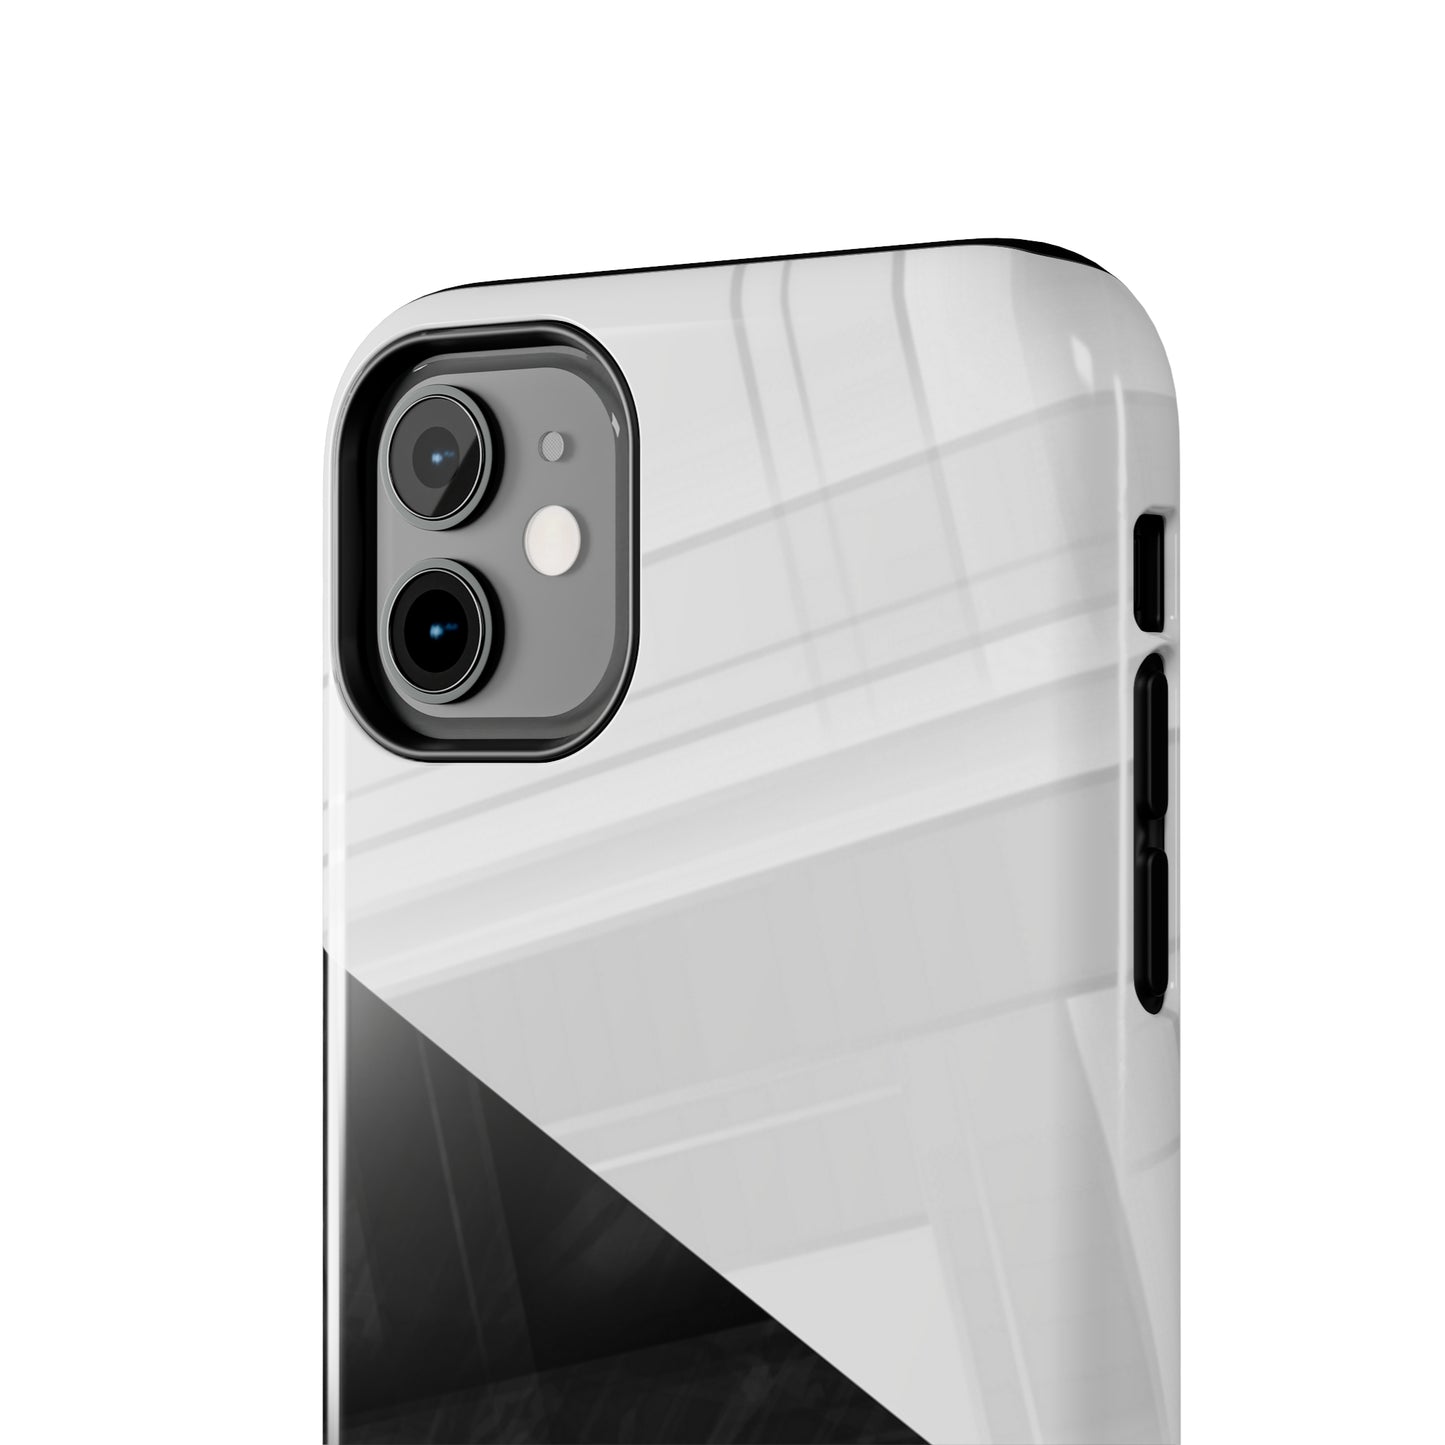 Monochrome Majesty: Black & White Phone Cases